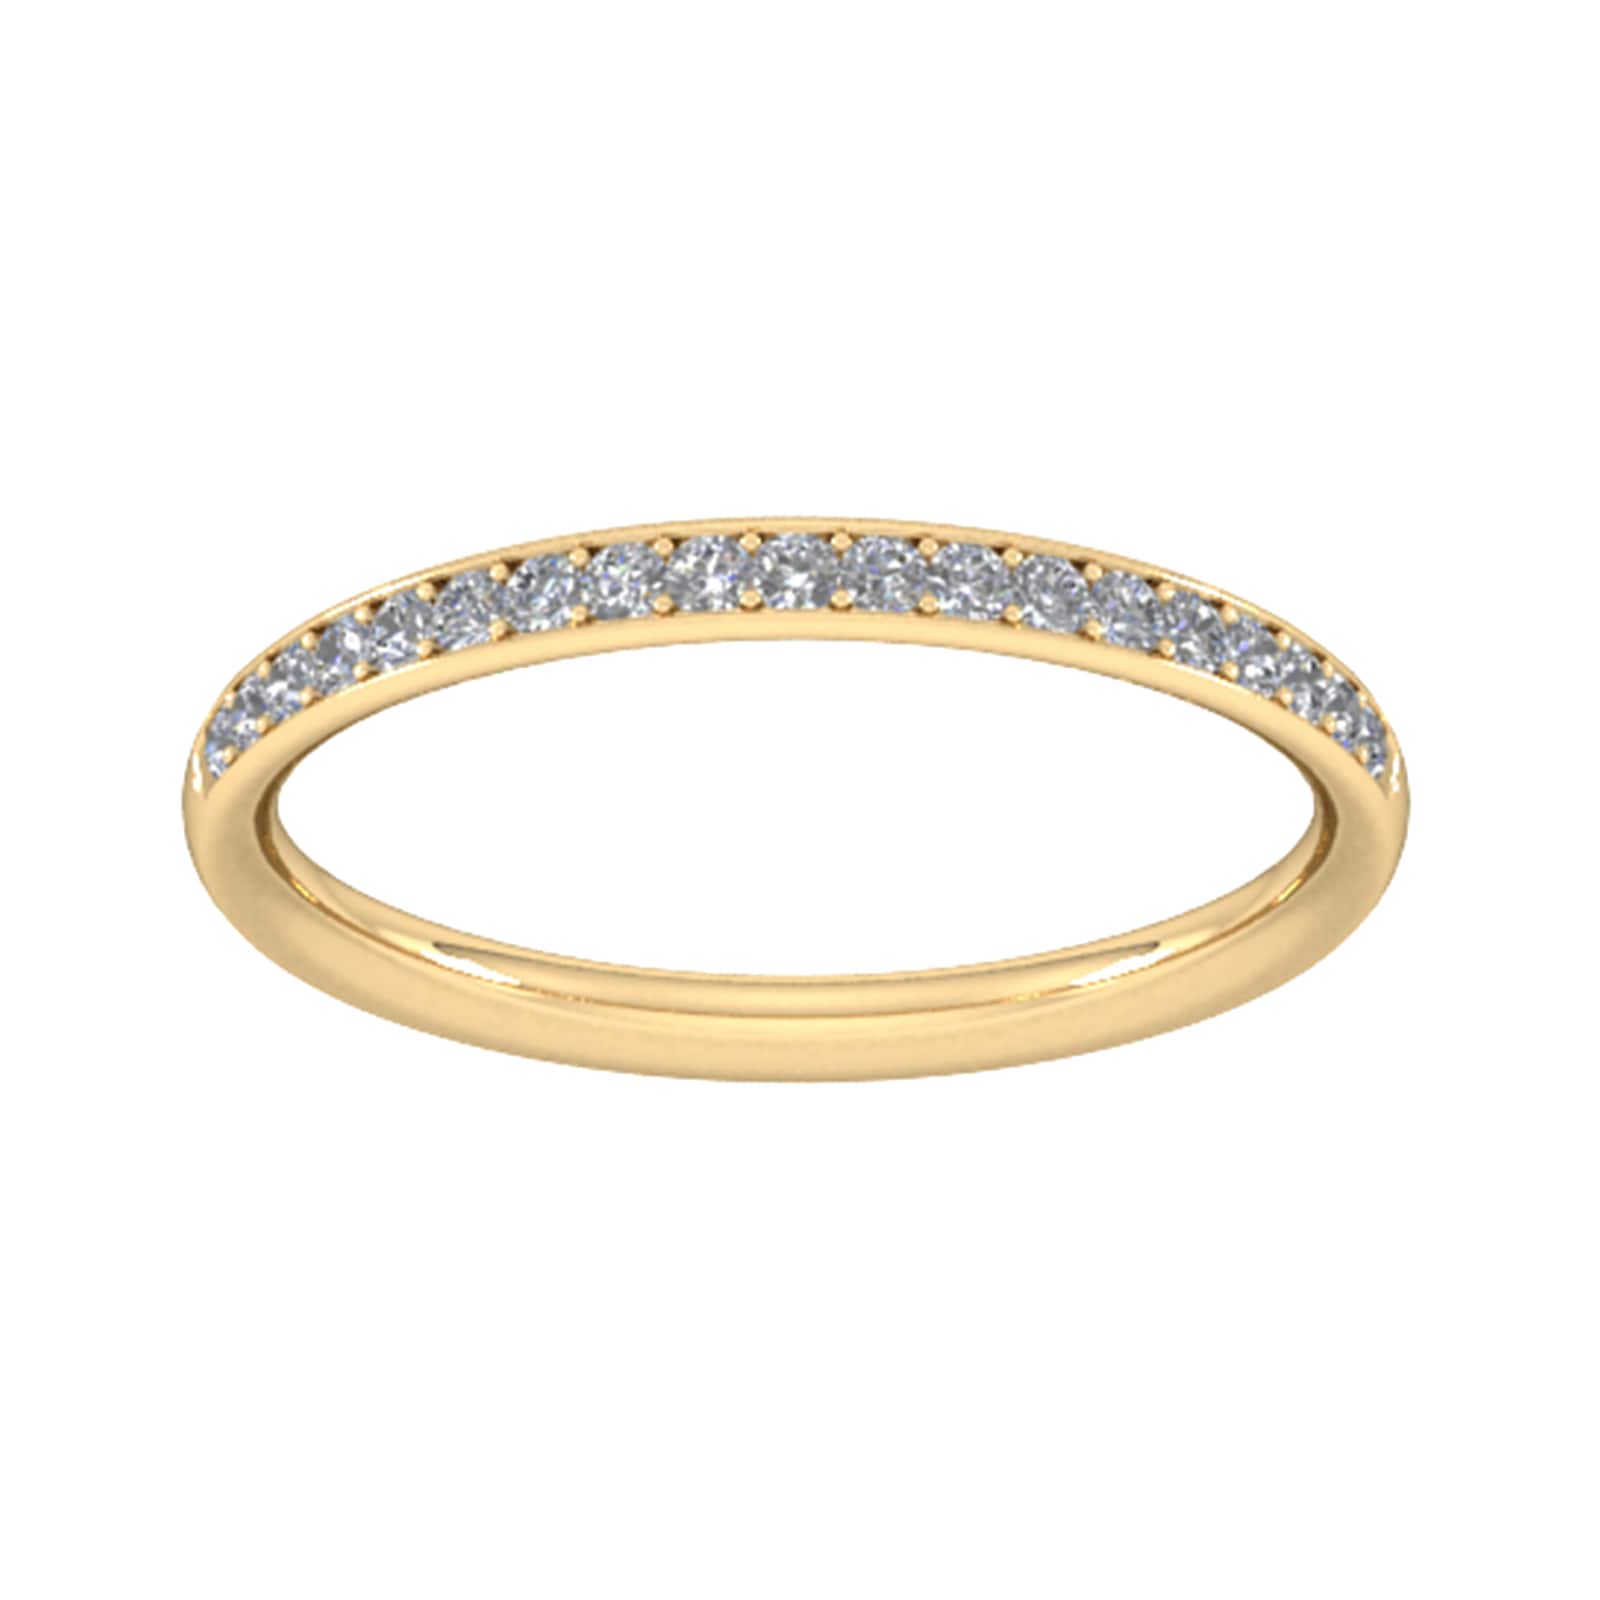 0.18 Carat Total Weight Brilliant Cut Grain Set Diamond Wedding Ring In 9 Carat Yellow Gold - Ring Size Z